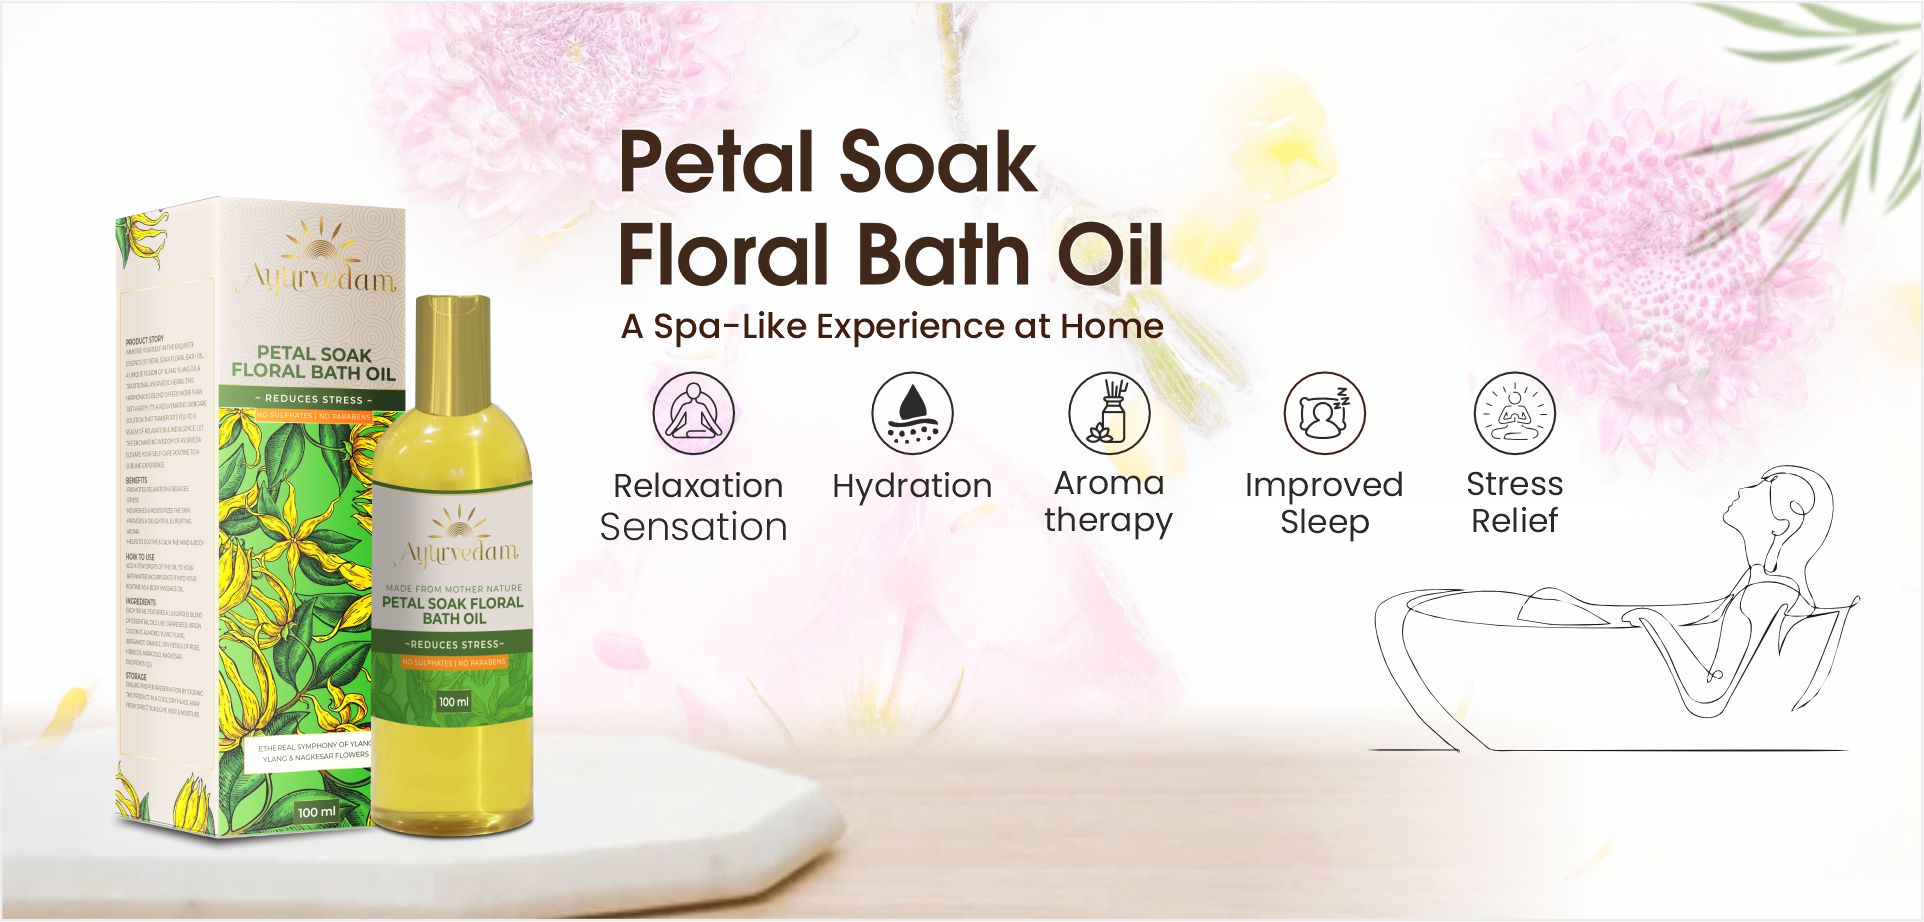 Web Banner of Petal Soak Floral Bath Oil